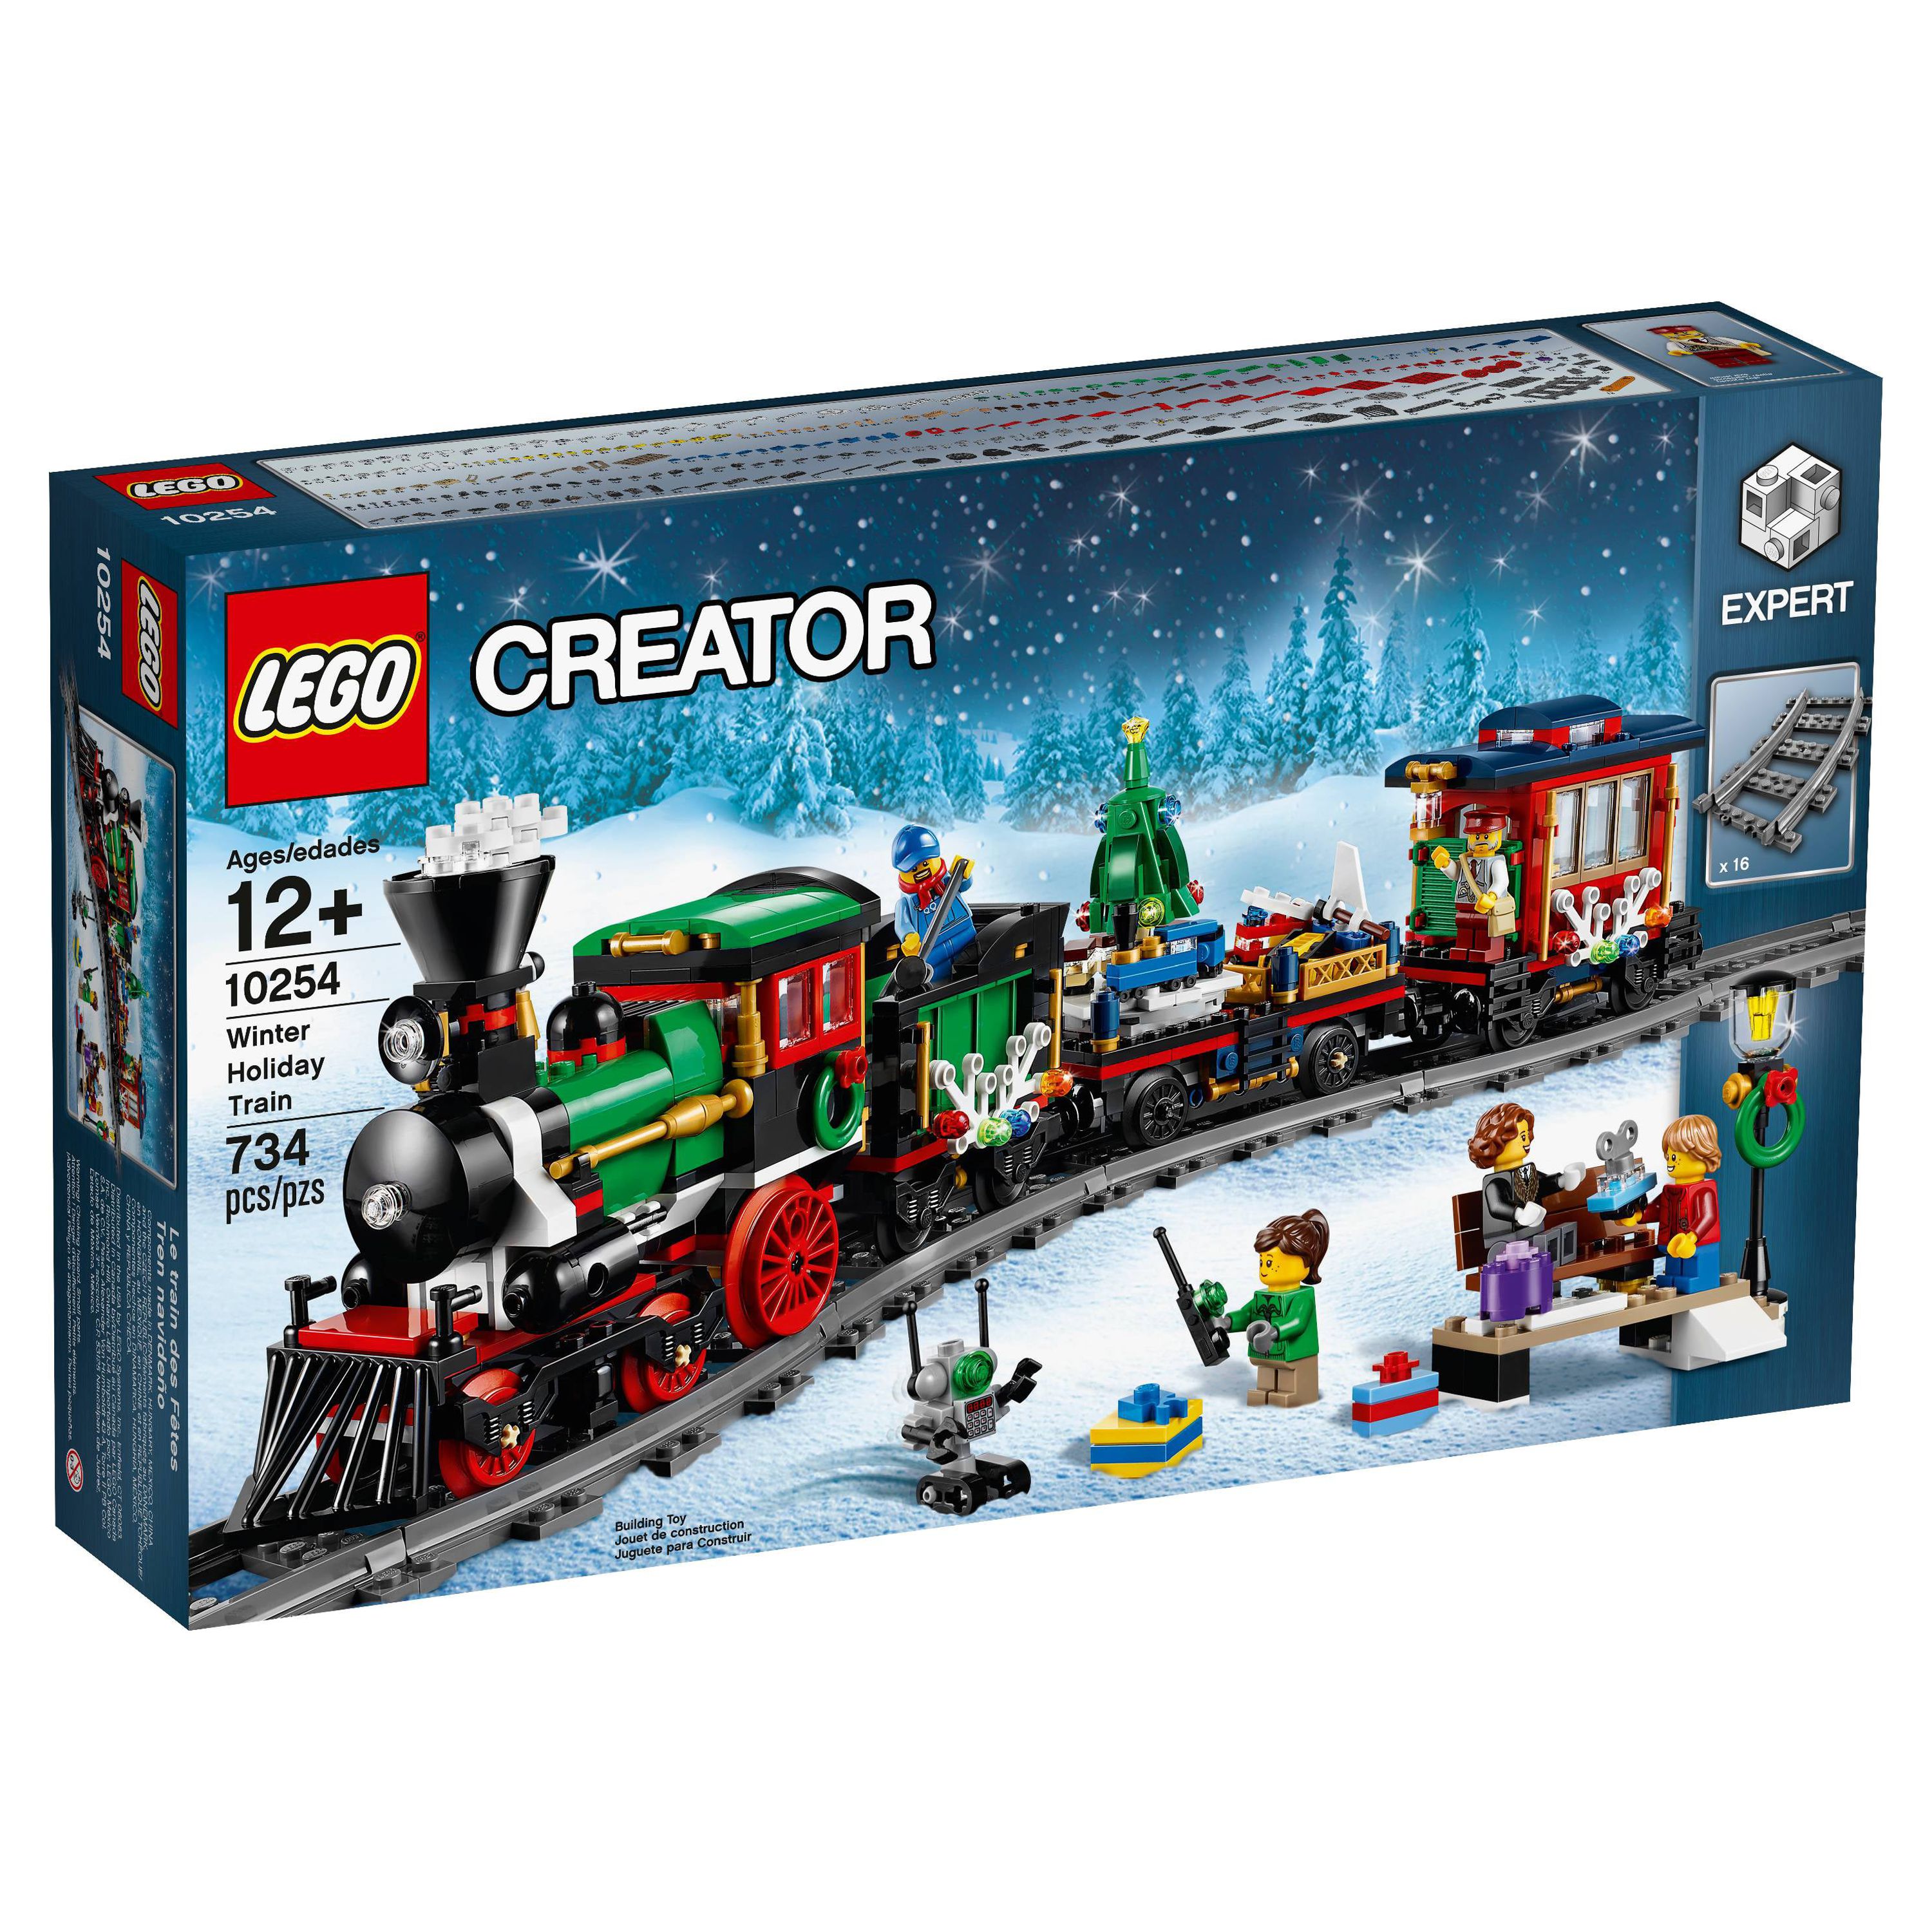 LEGO Creator Expert Winter Holiday Train 10254 - image 3 of 6